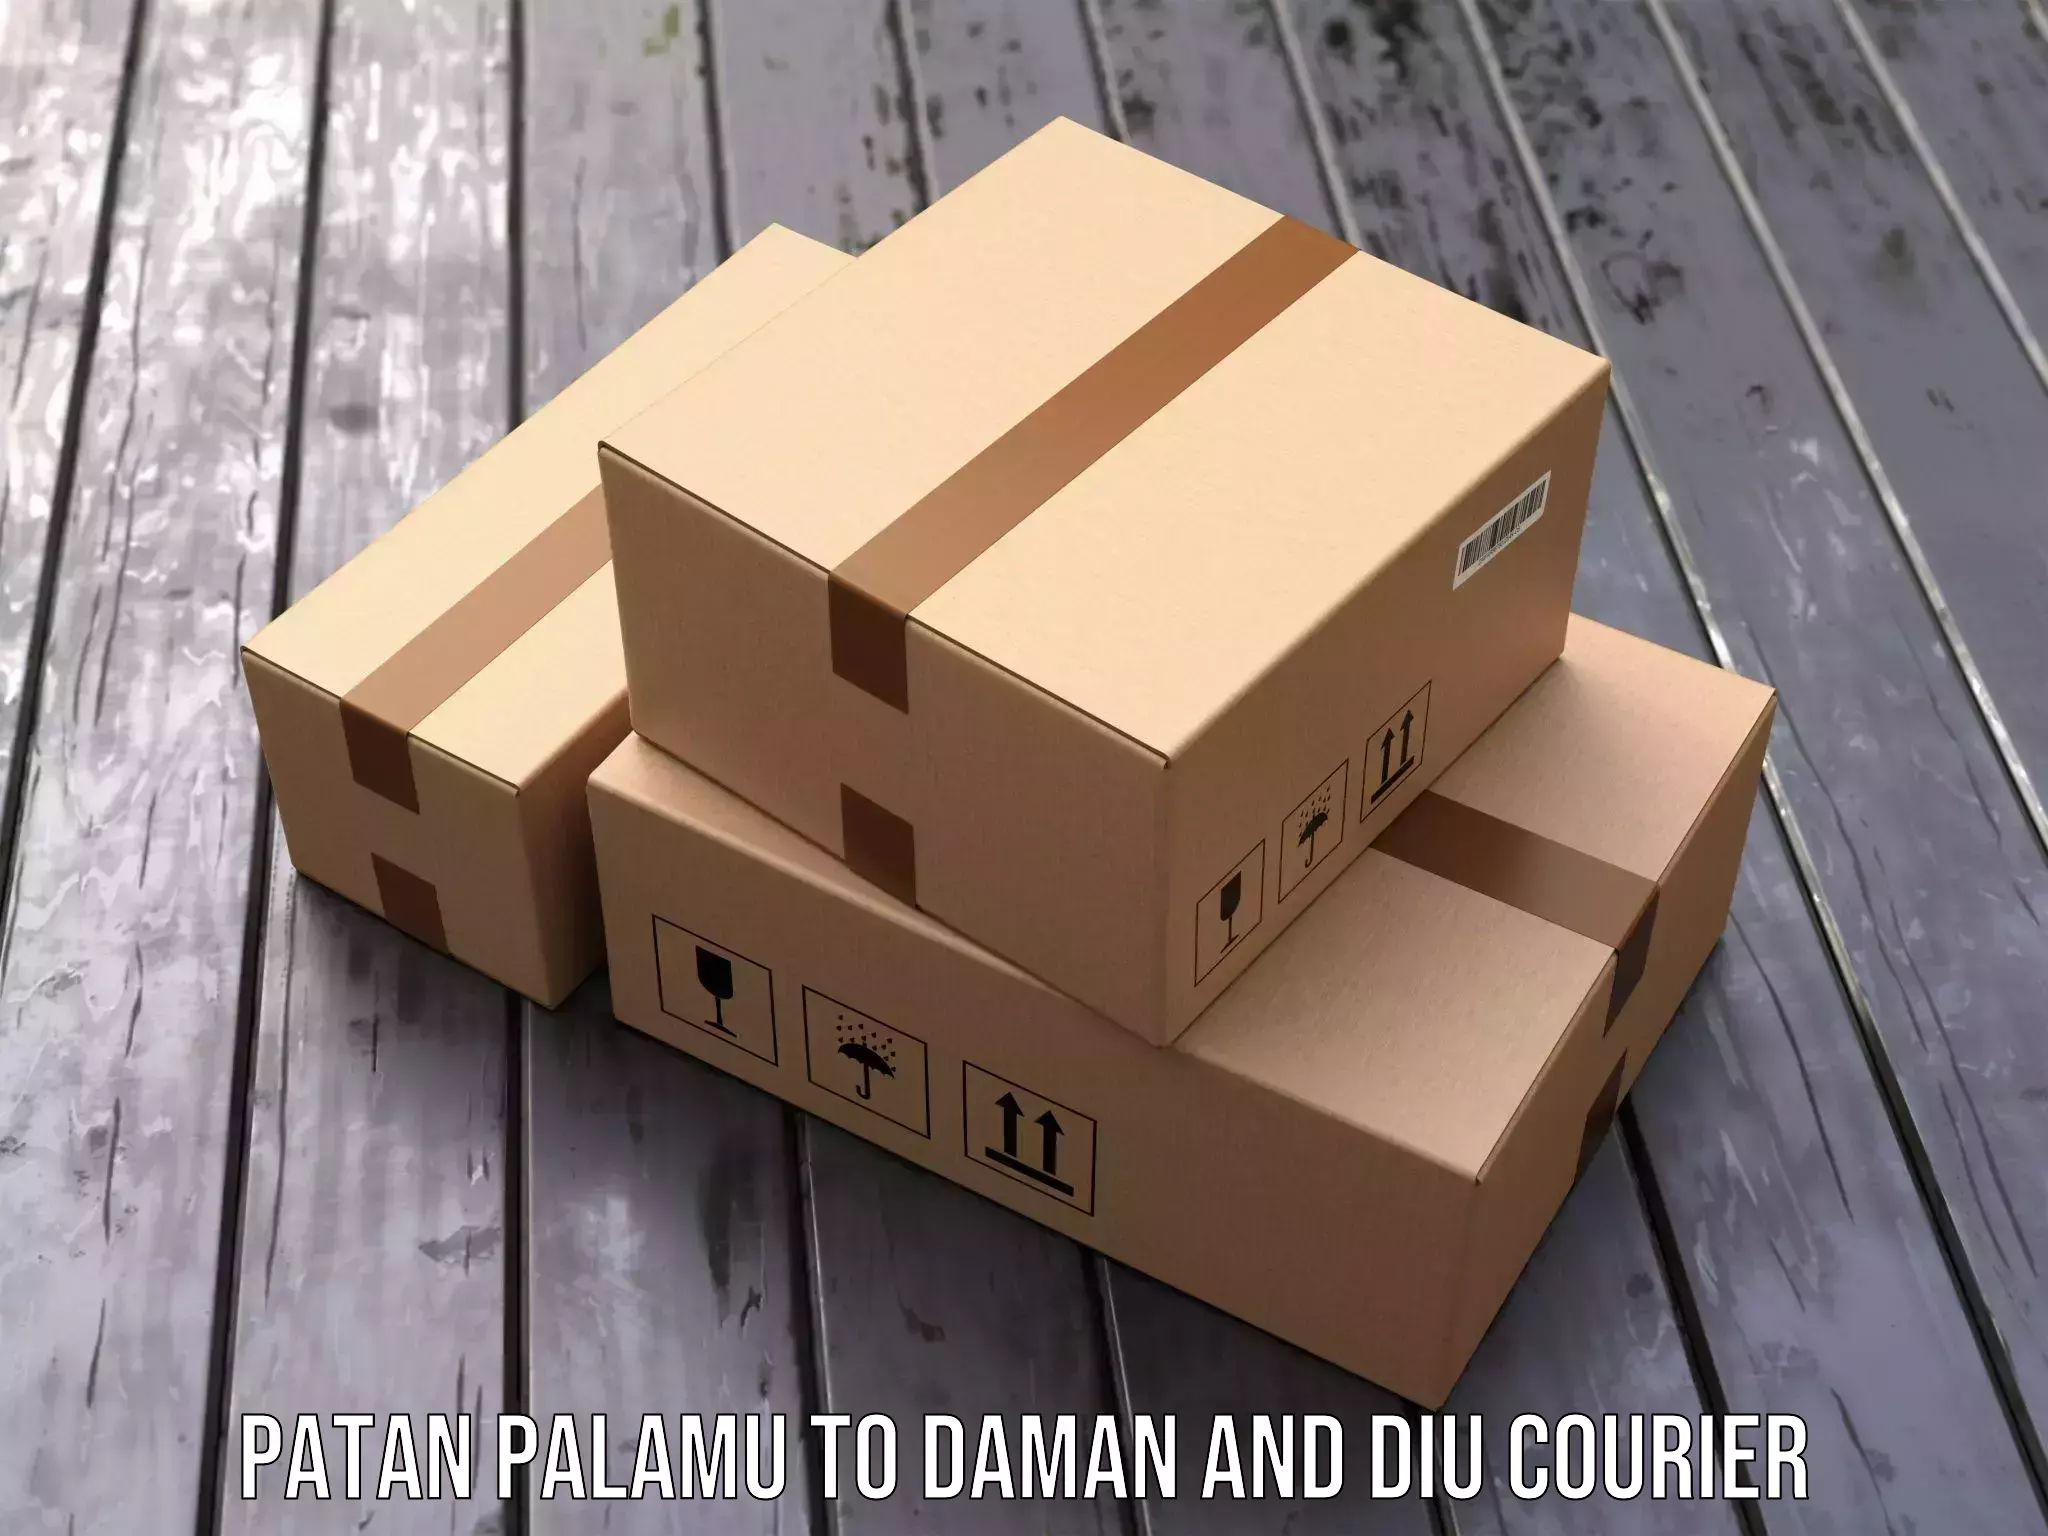 Tailored shipping plans in Patan Palamu to Diu